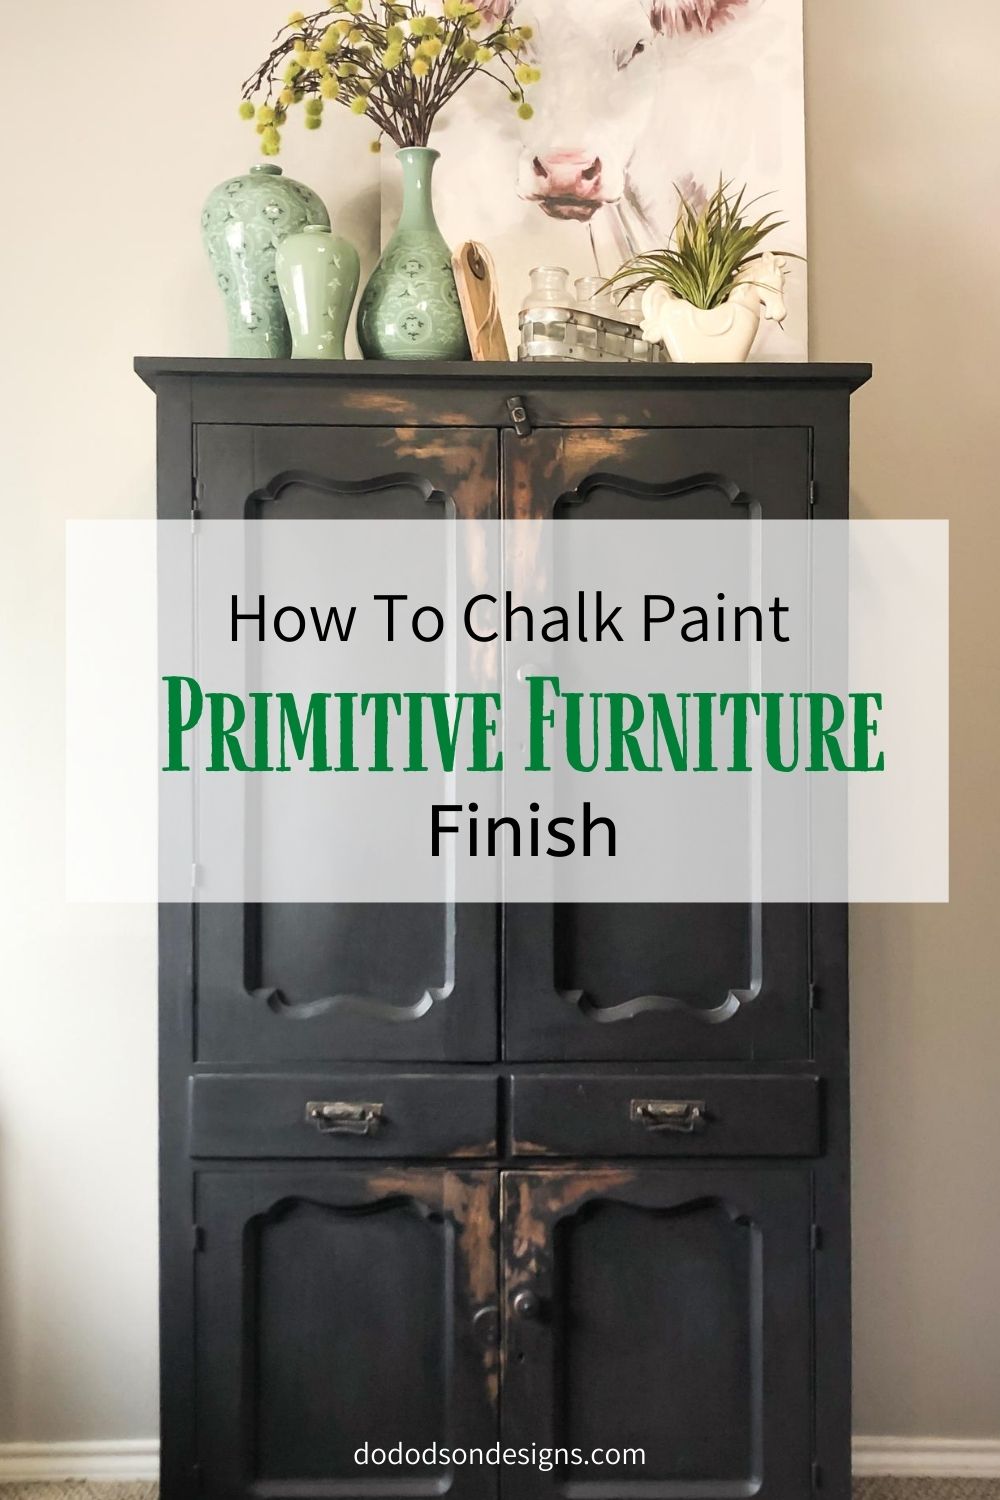 How To Chalk Paint A Primitive Furniture Finish Do Dodson Designs